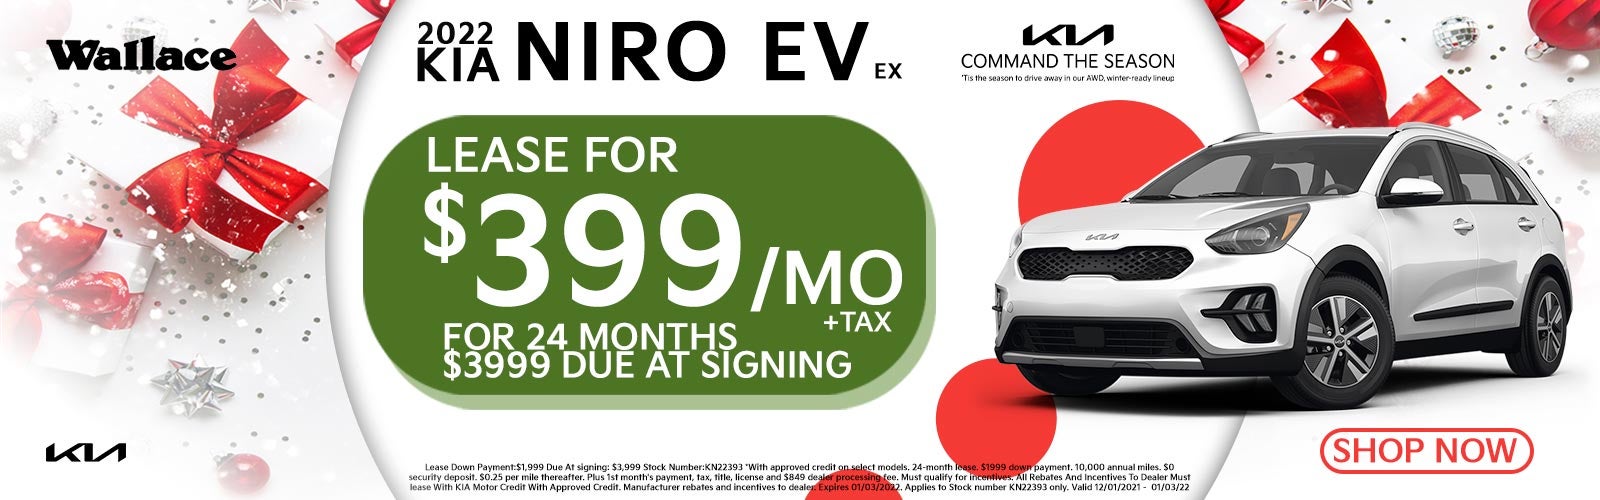 Kia Niro EV Special Offer